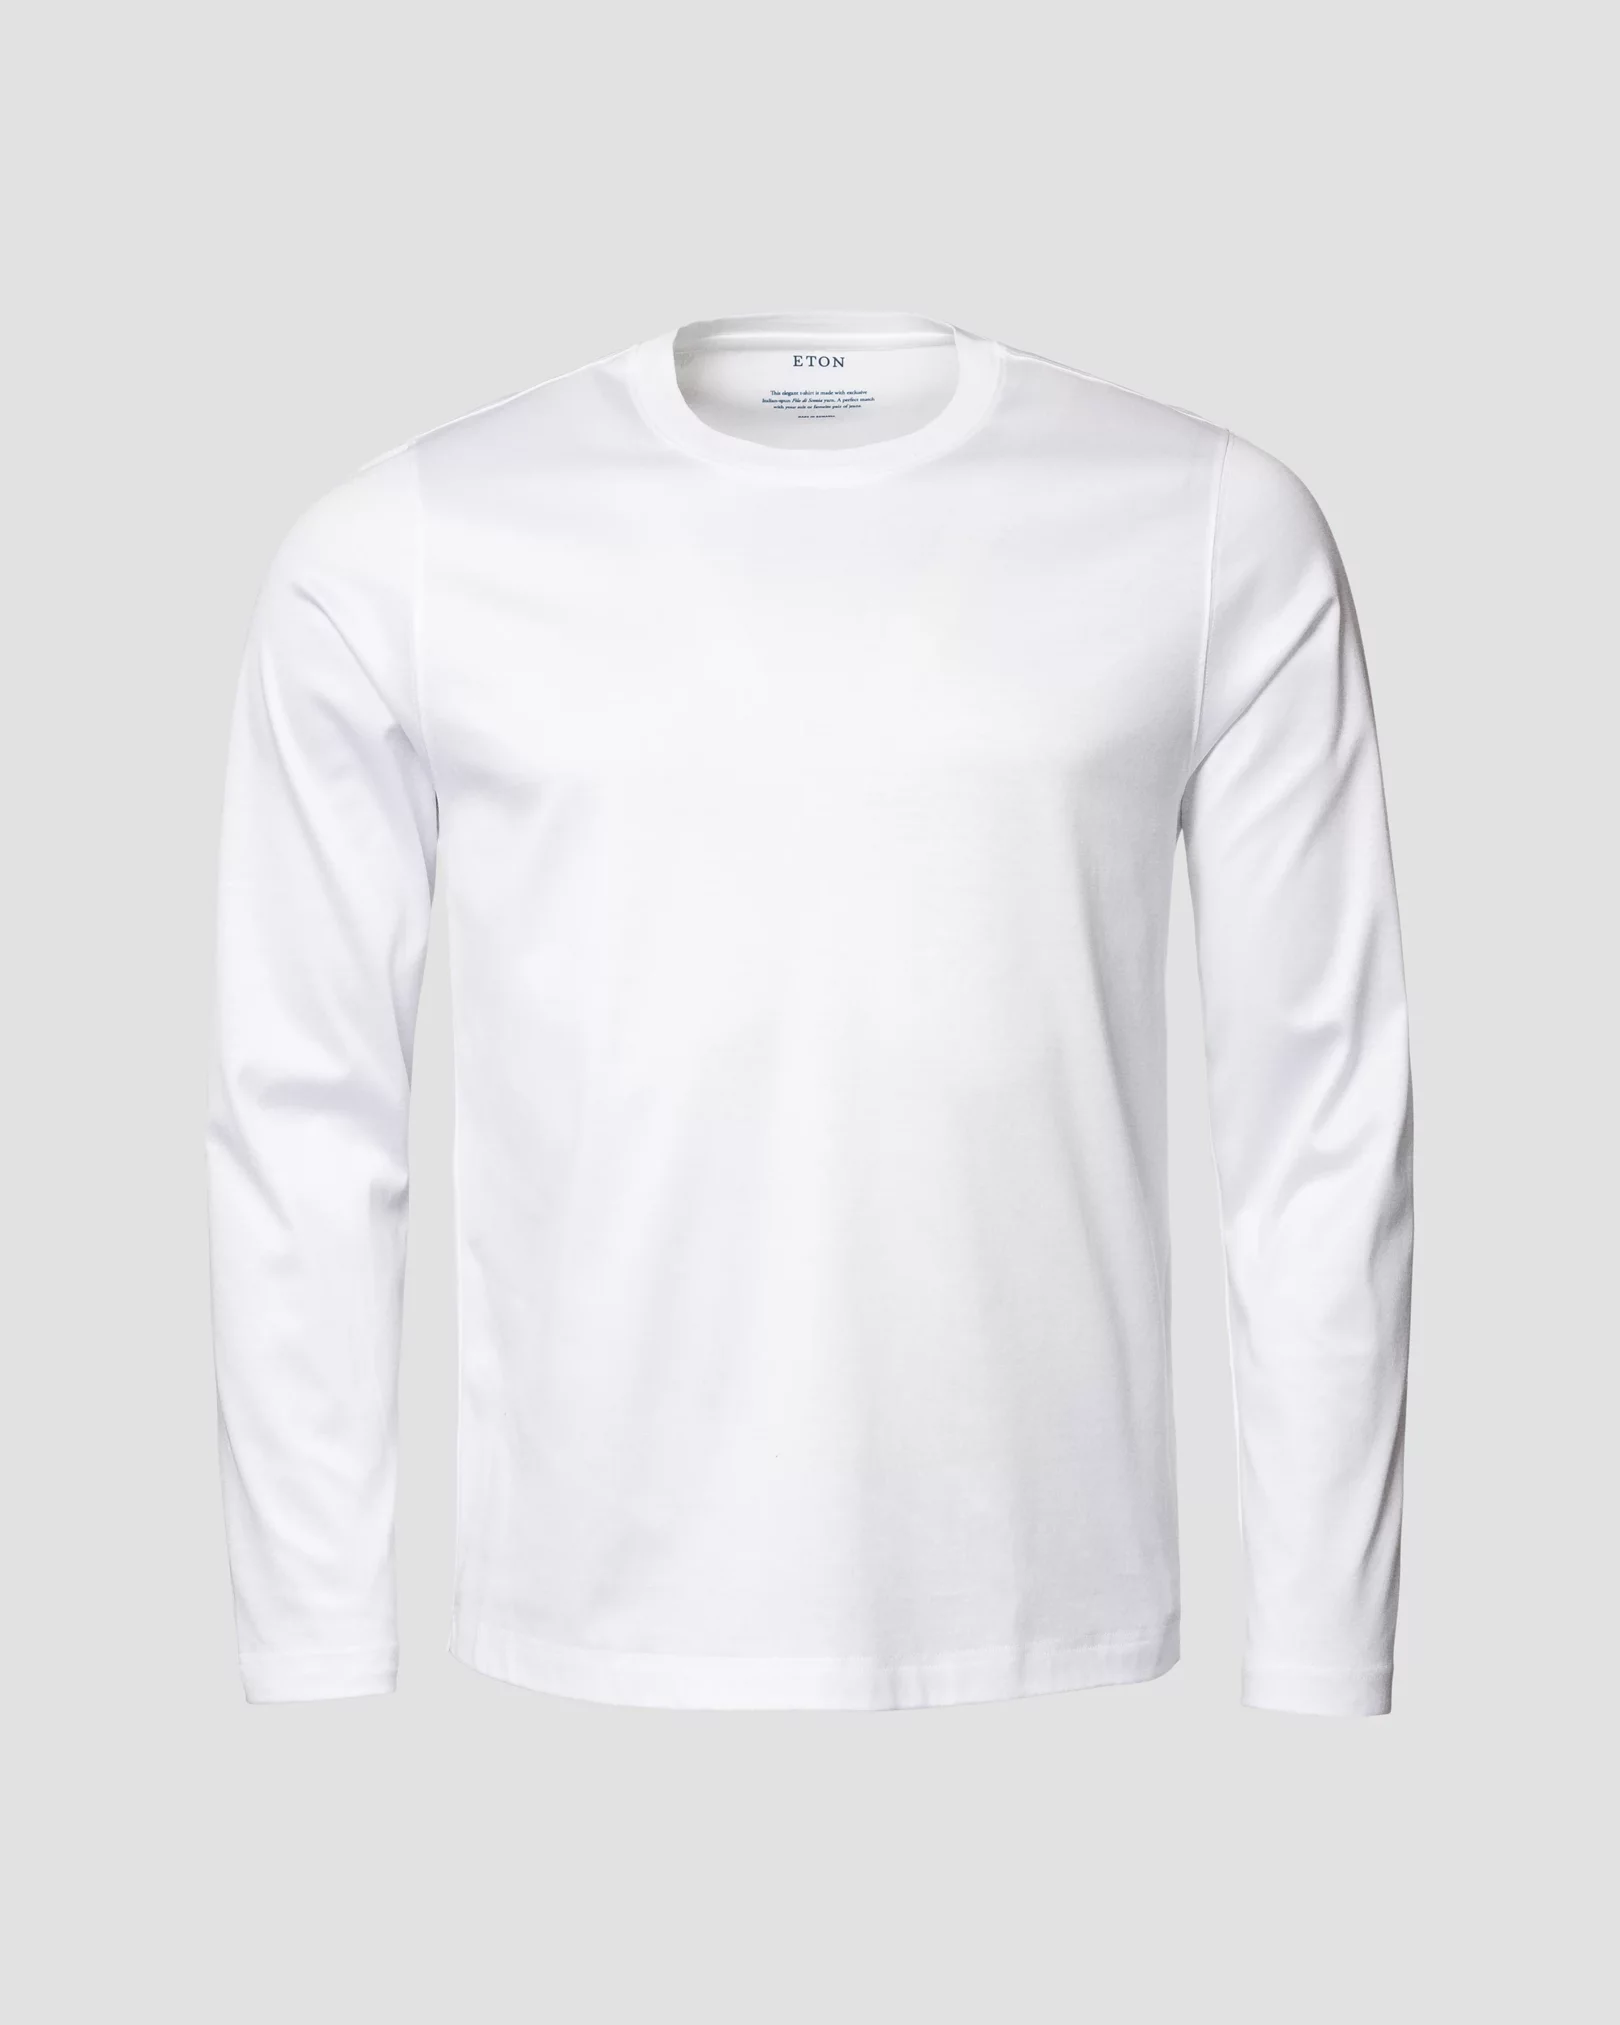 Weißes Shirt aus Filo di Scozia - Langarm